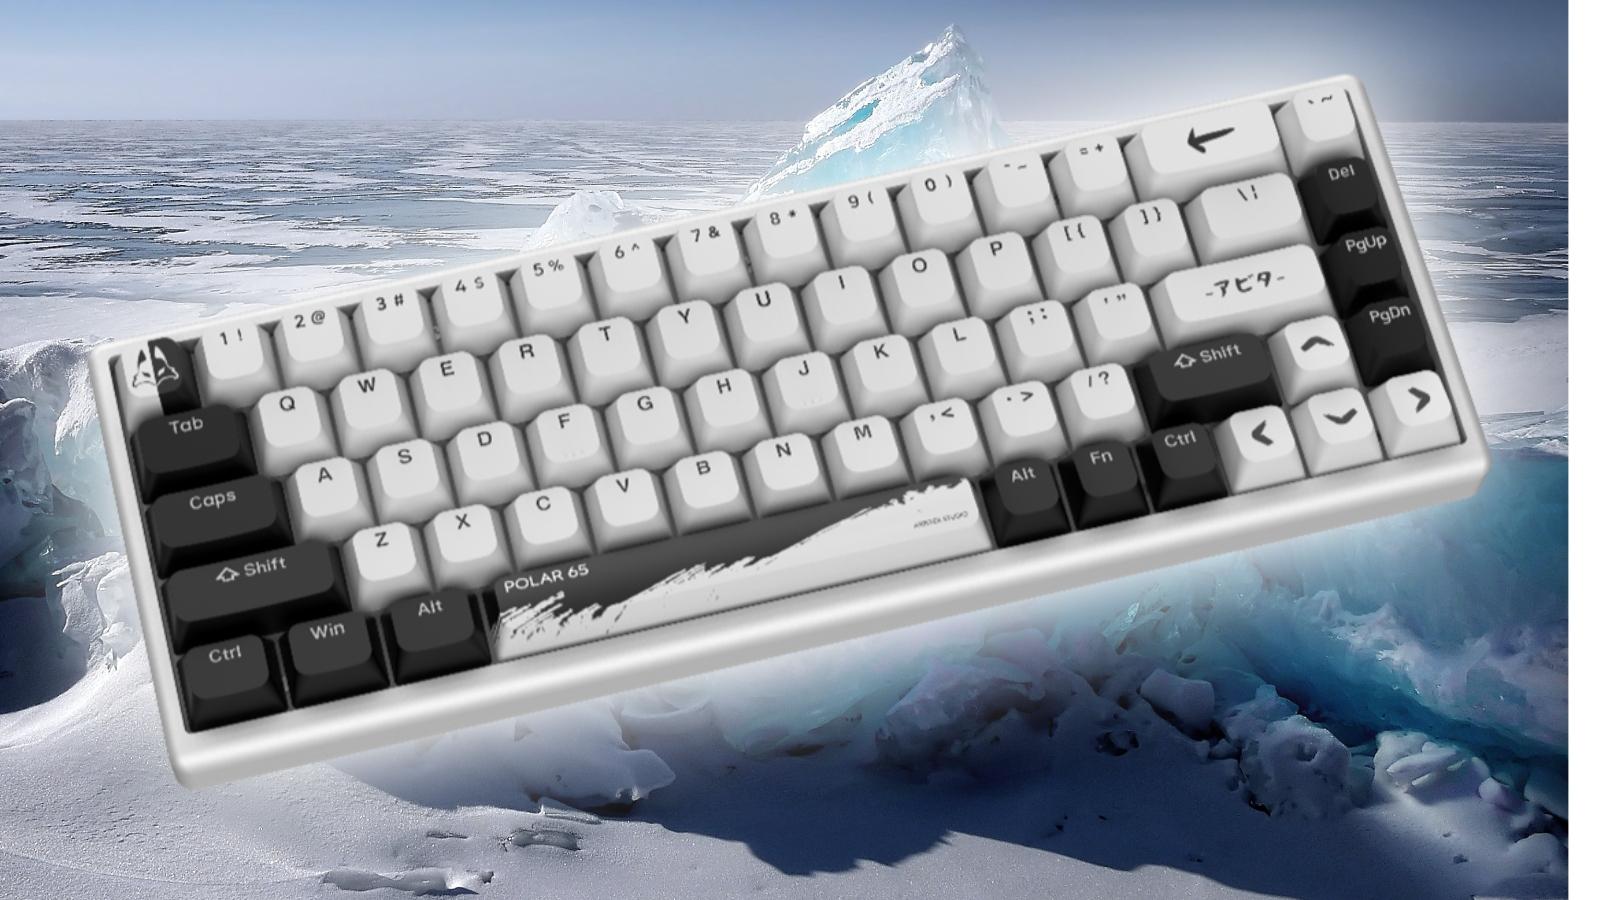 Polar 65 keyboard on an icy background